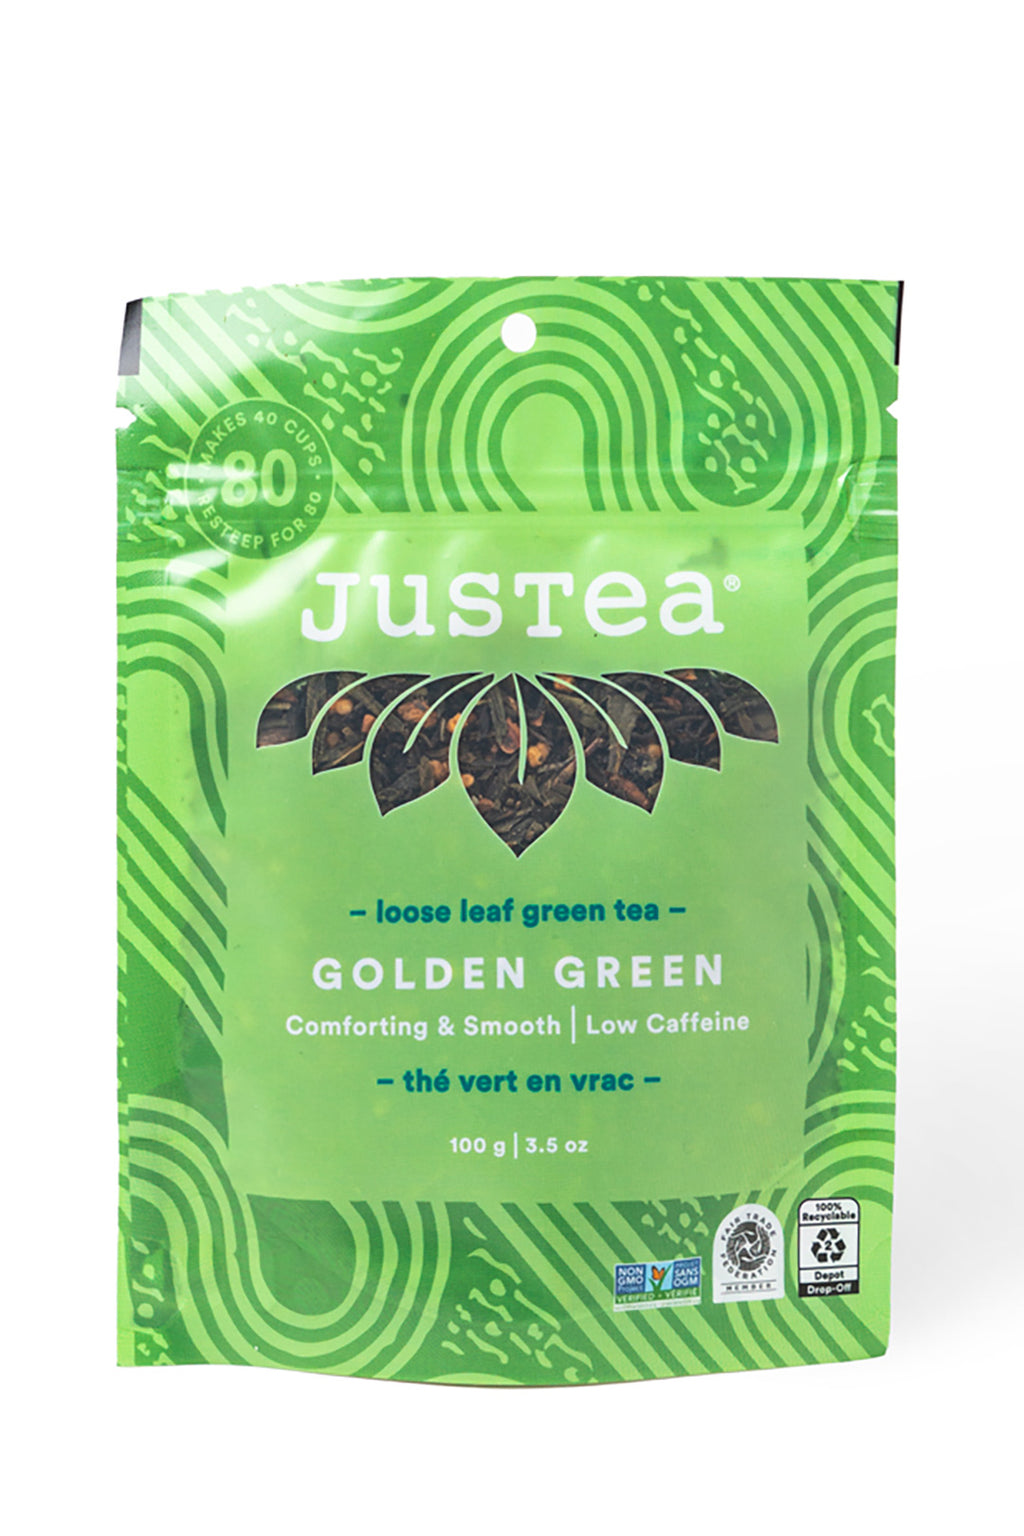 JusTea Golden Green Loose Leaf Tea